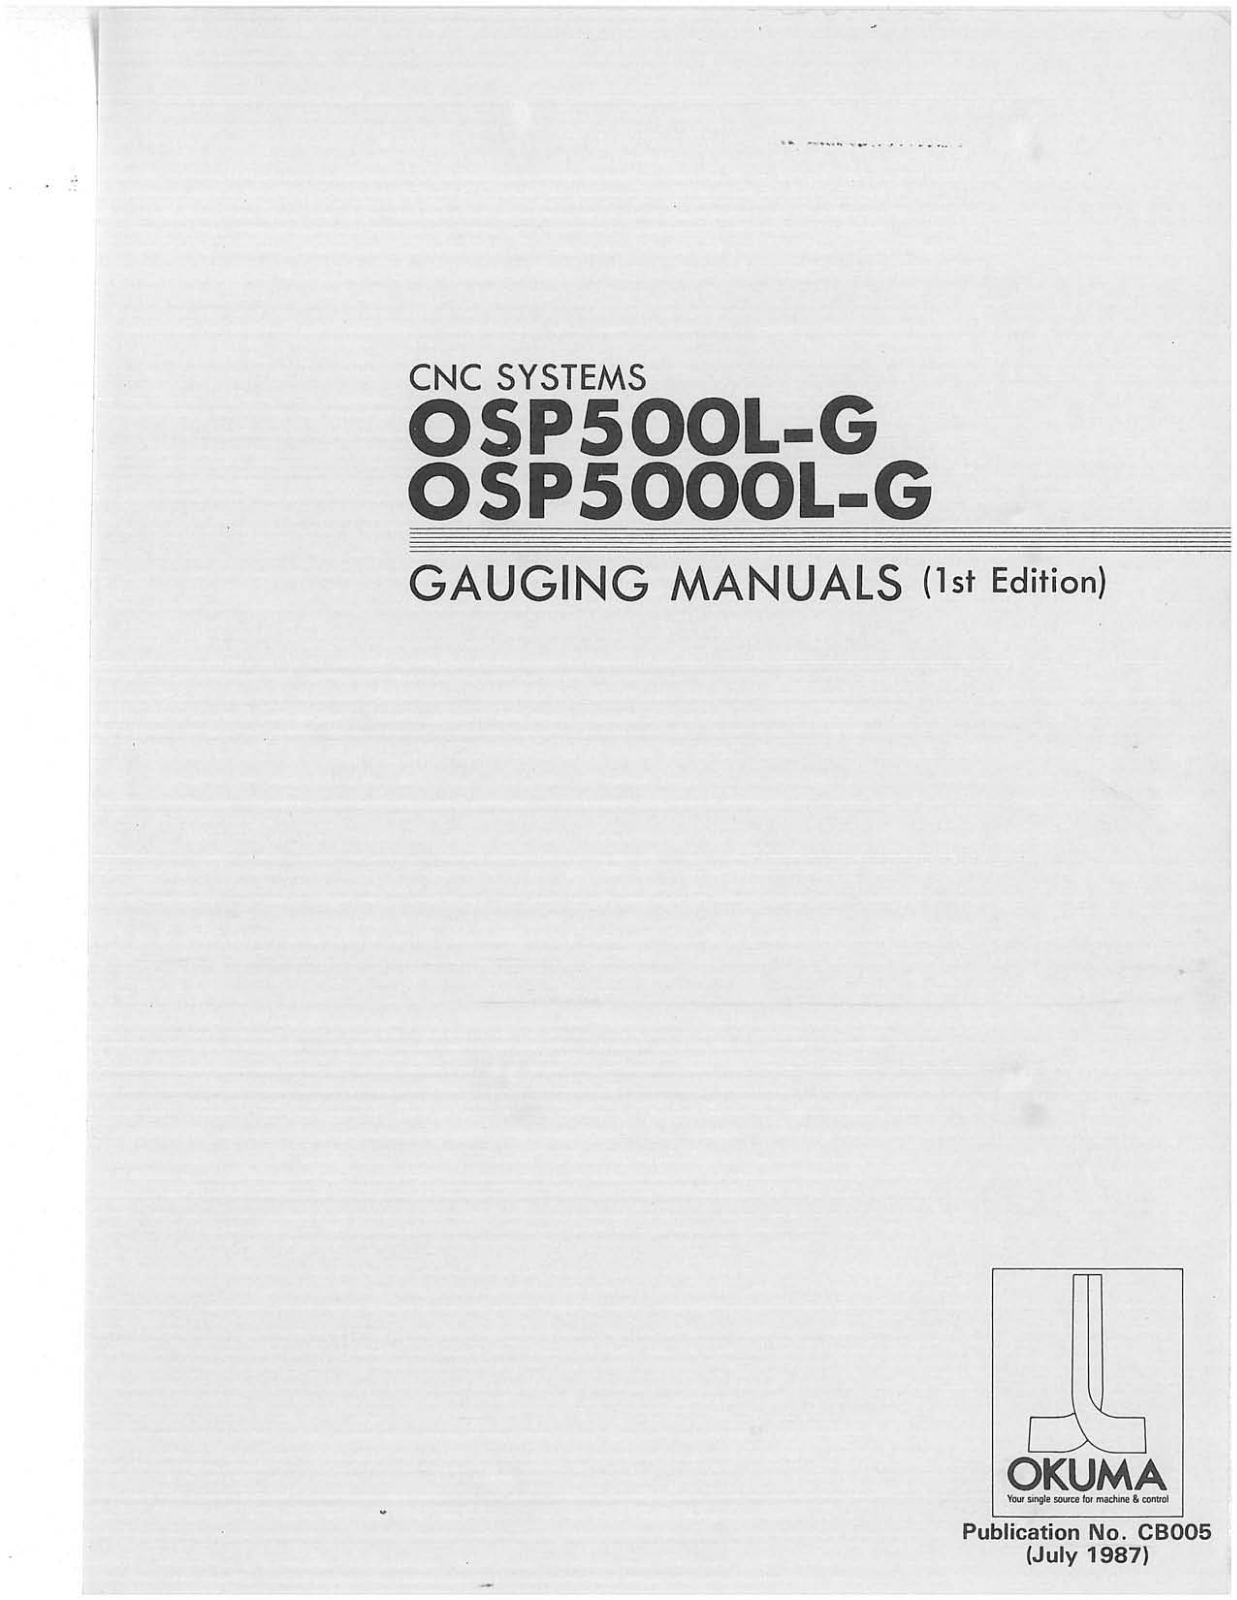 okuma OSP500L-G, OSP5000L-G User Manual